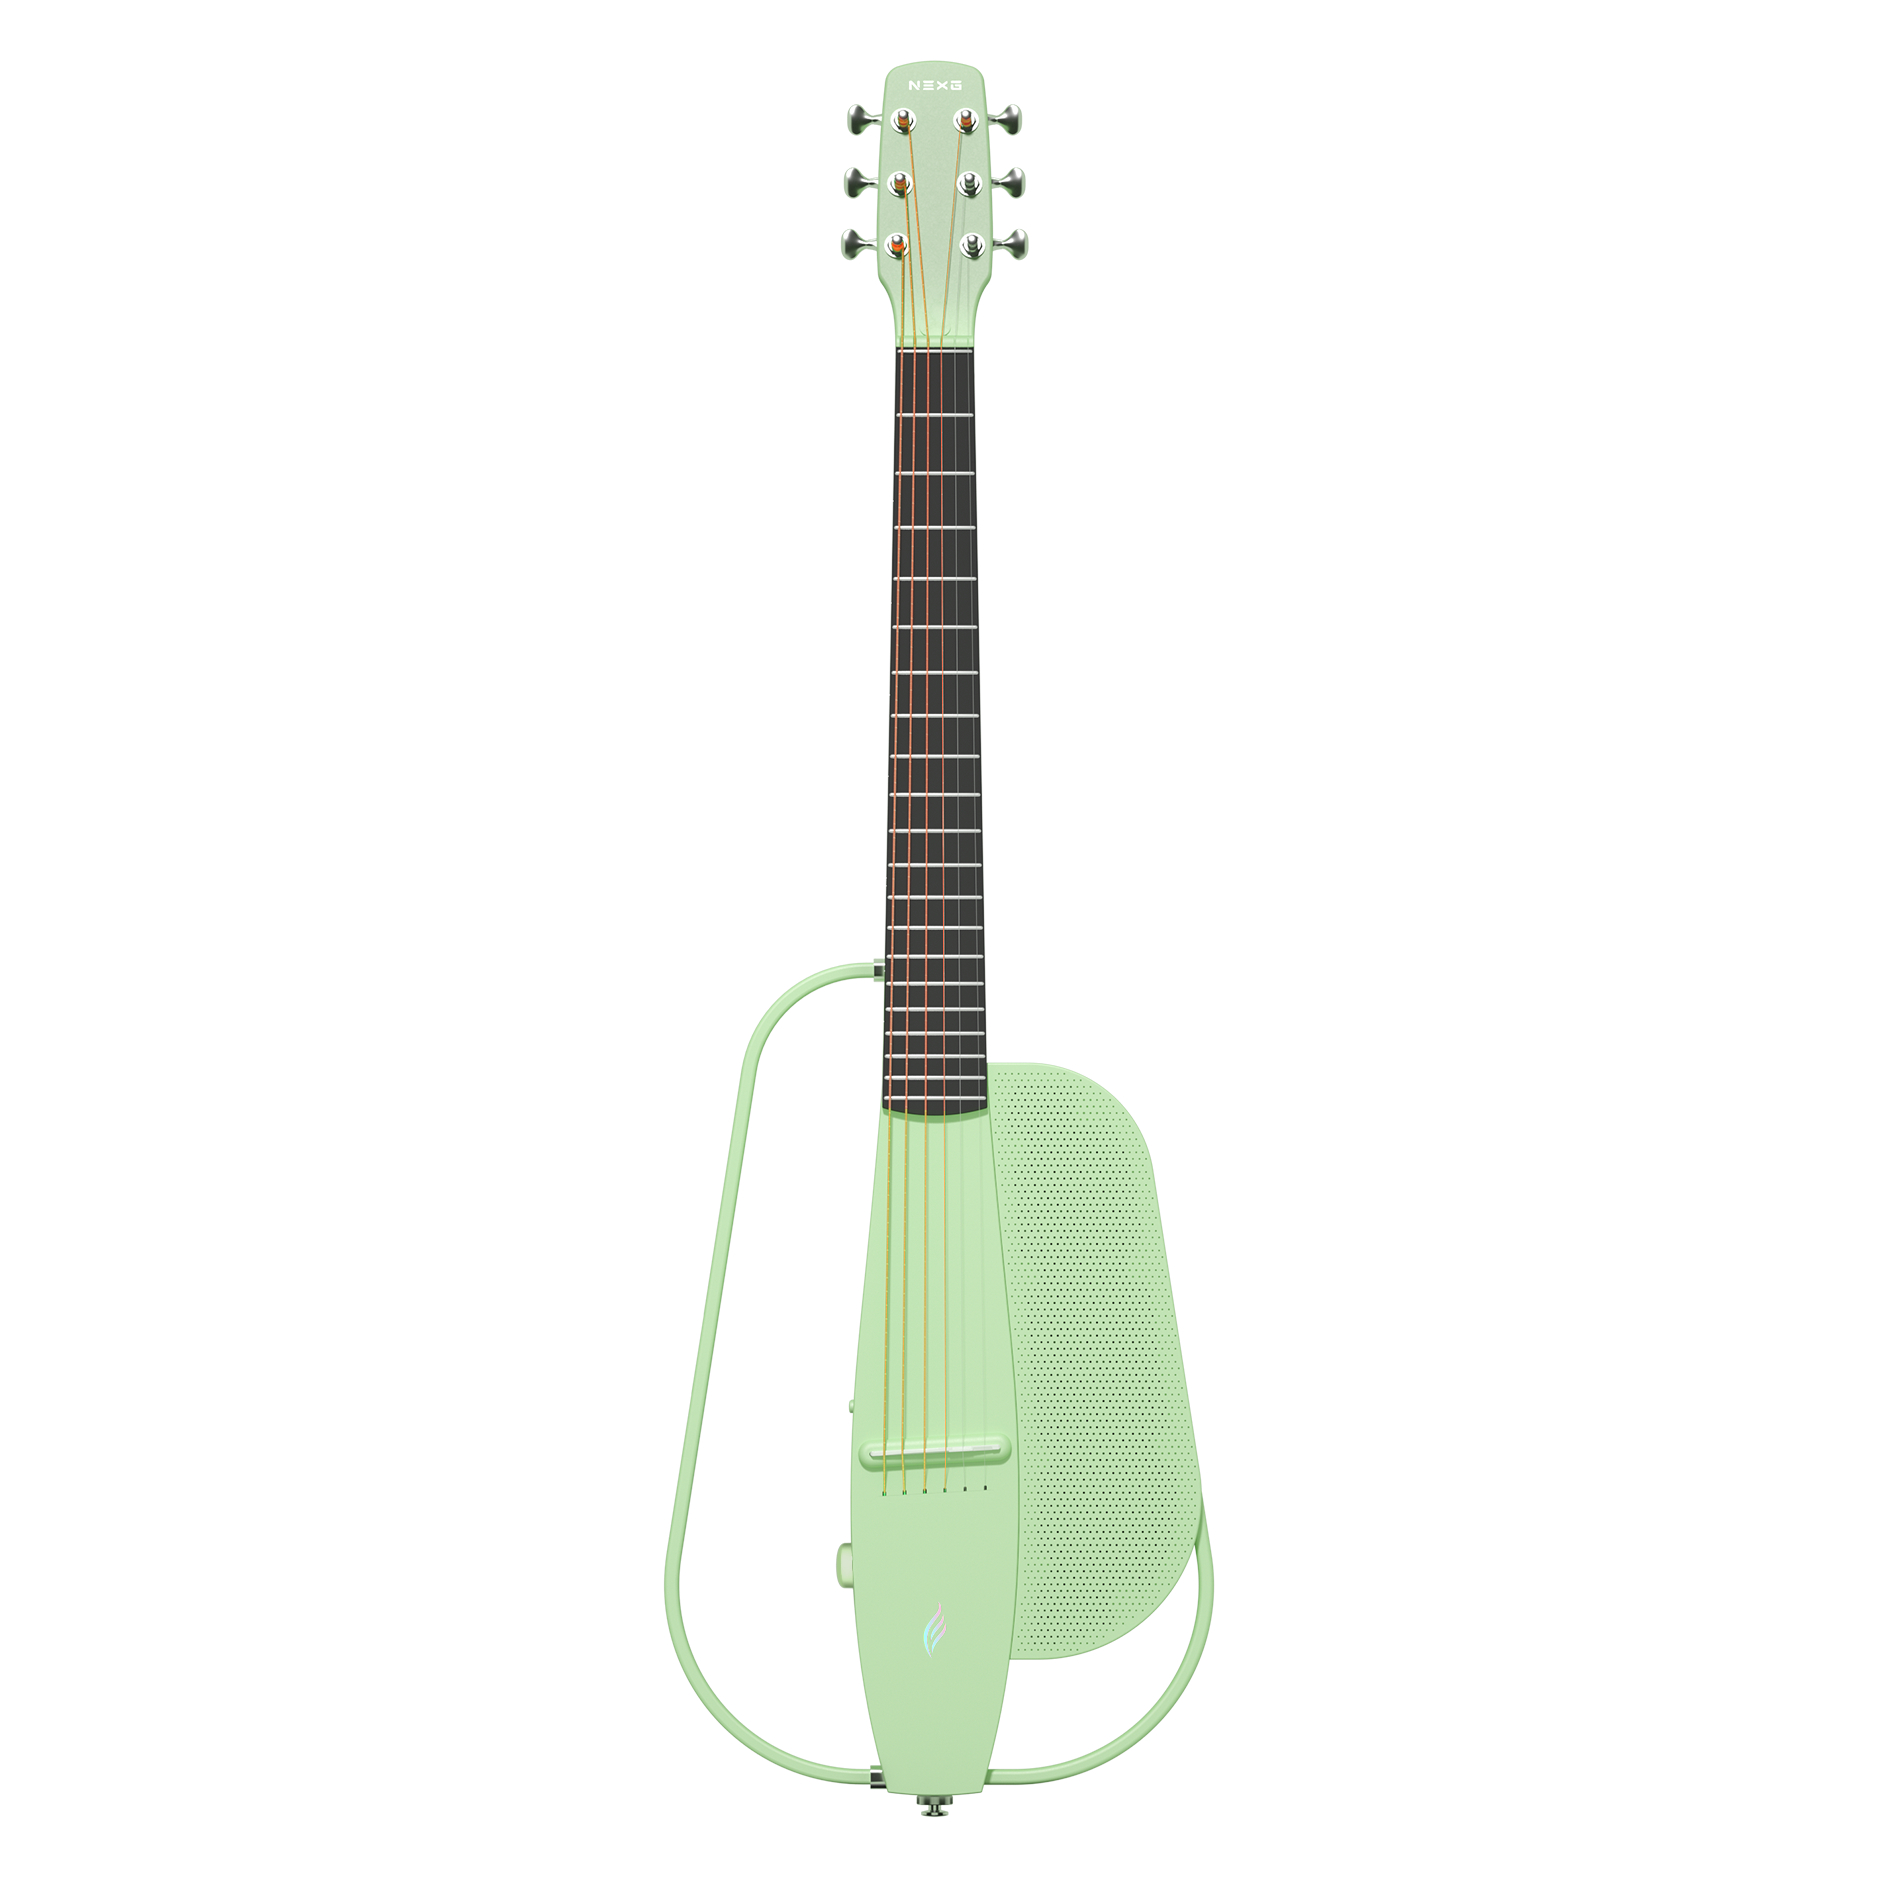 Nexg® SE. A beginner-friendly edition of the Nexg smart guitar line